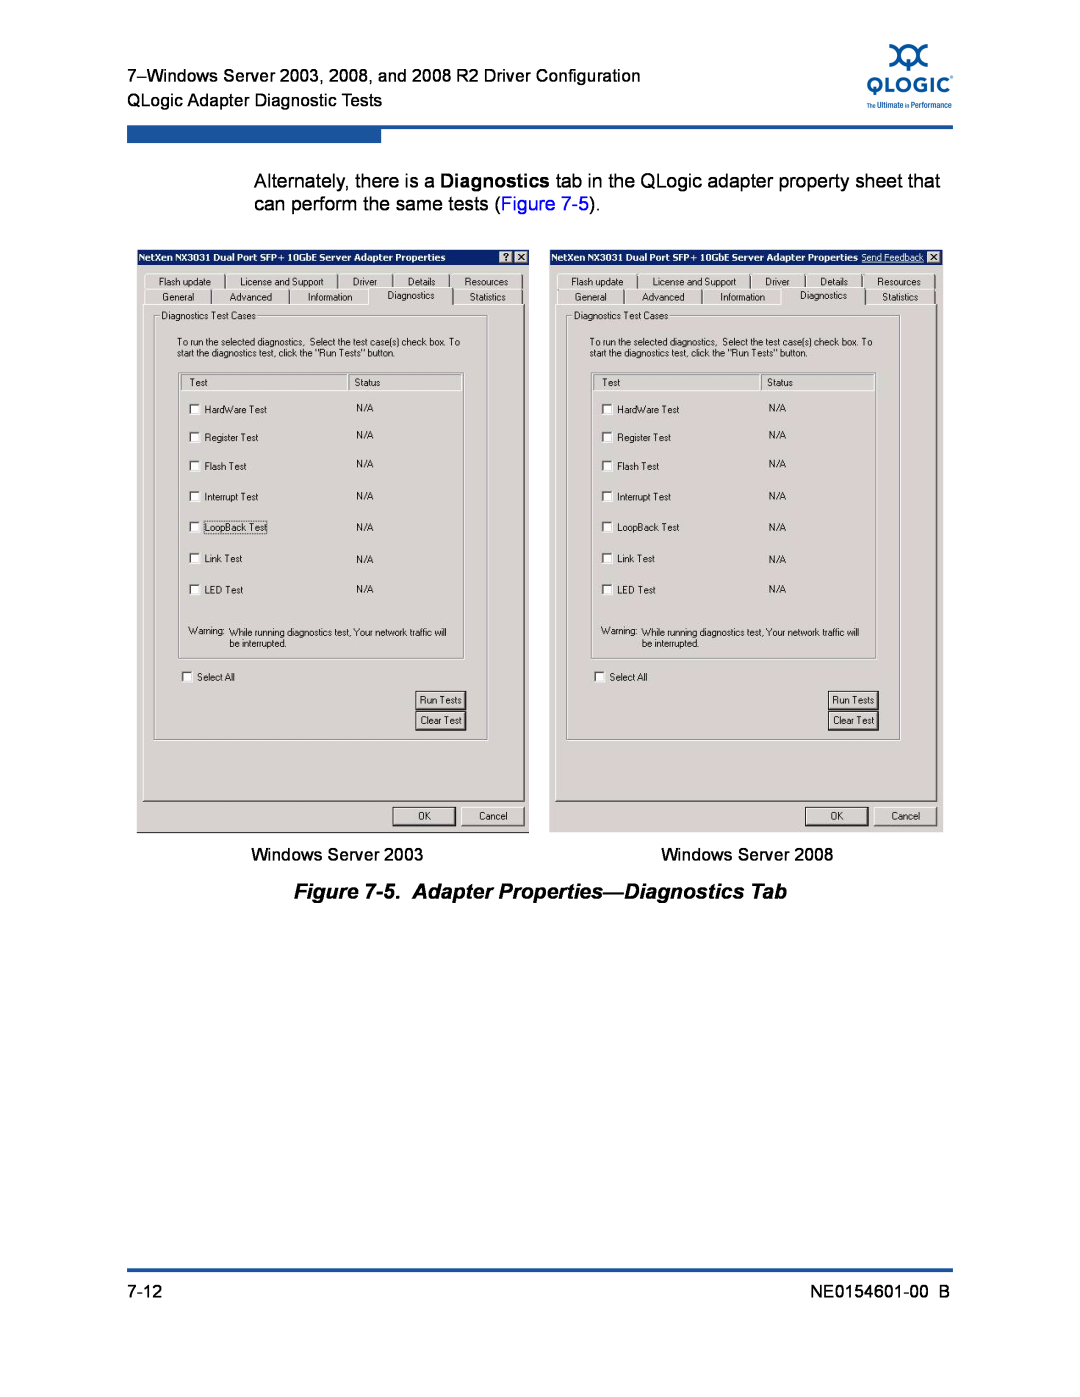 Q-Logic 3100, 3000 manual 5. Adapter Properties-Diagnostics Tab, Windows Server, 7-12, NE0154601-00 B 